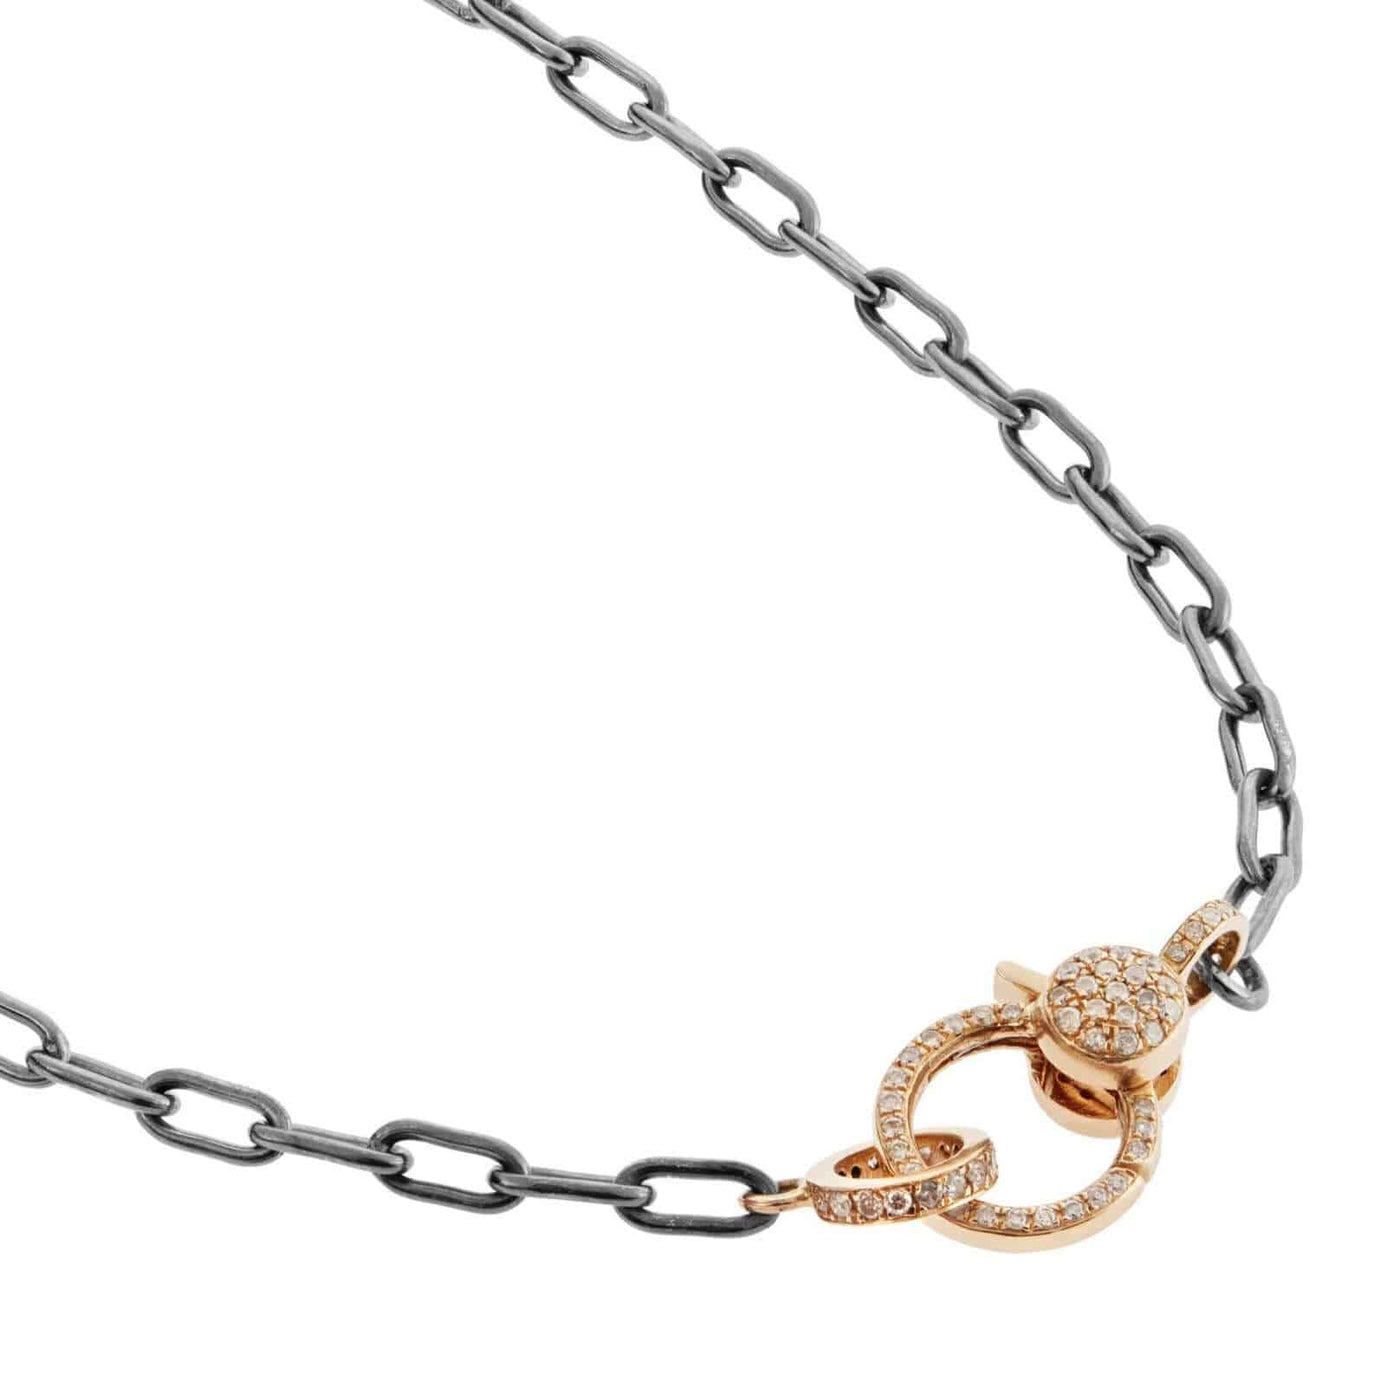 Narrow oblong chain with small diamond lock SLV-Y14-D - Chains - Ileana Makri store